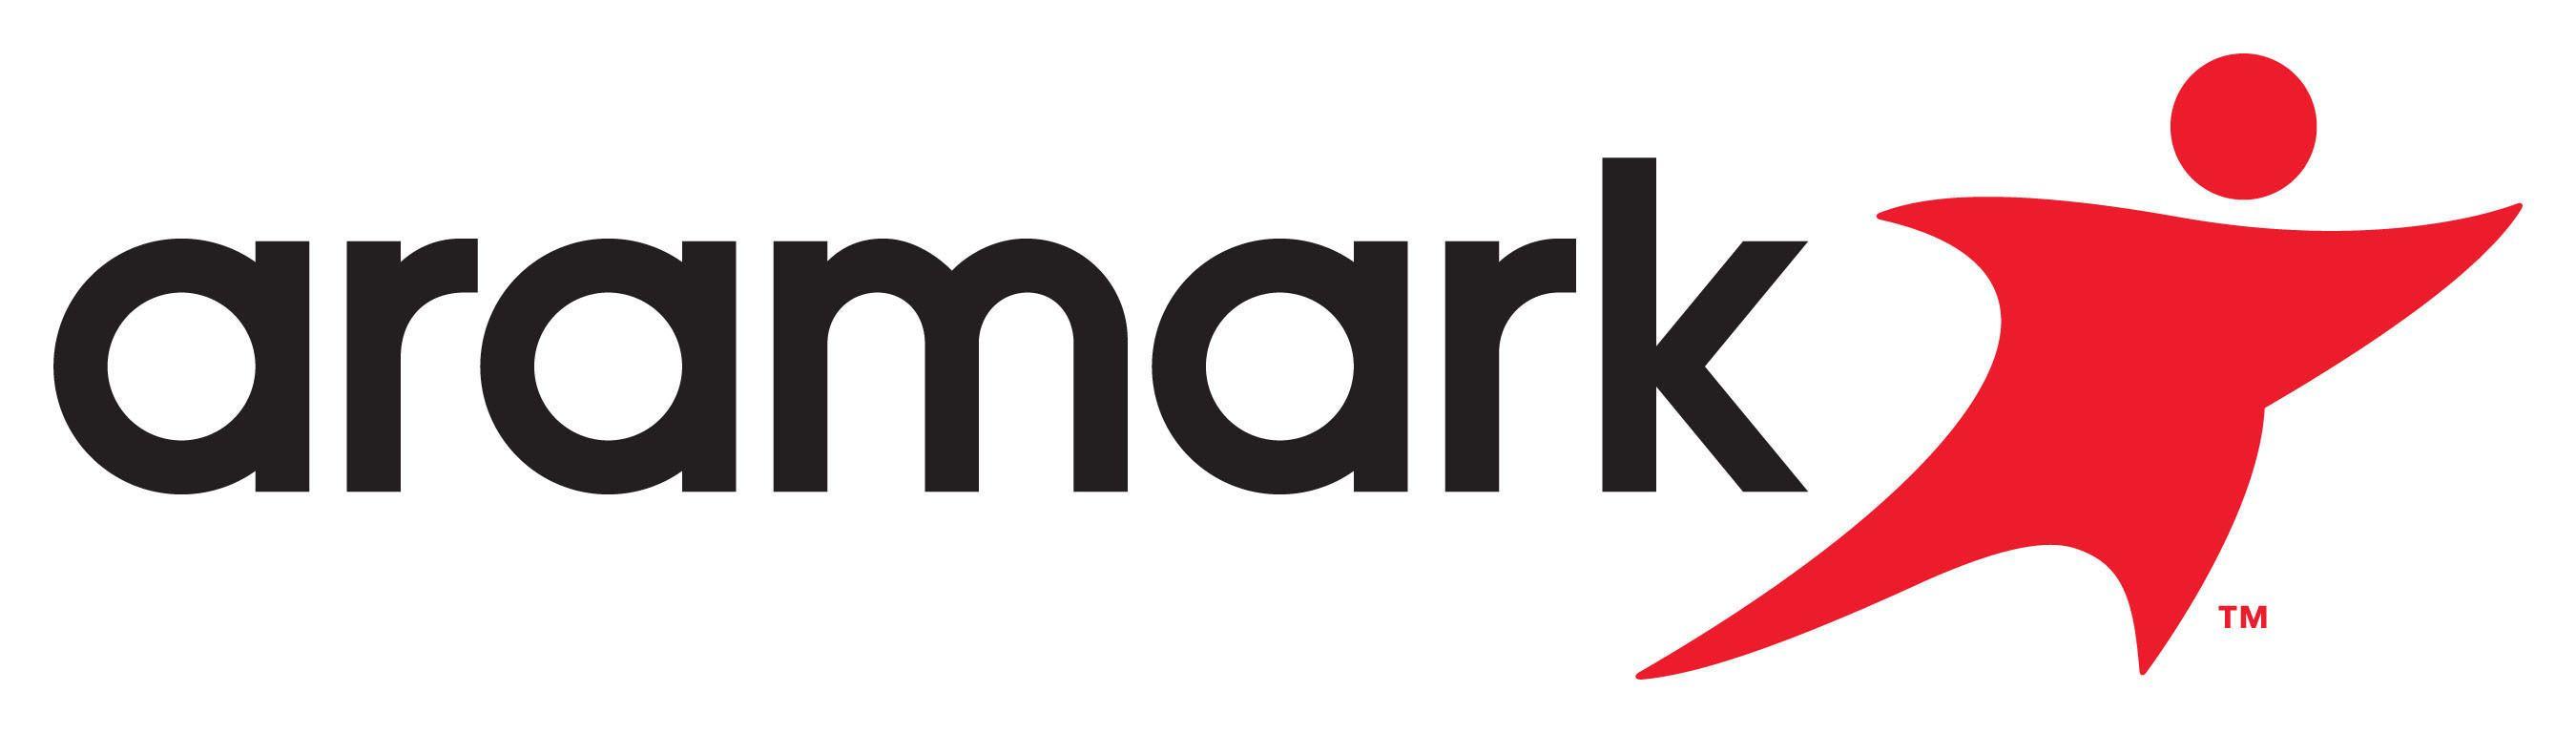 Aramark.com Logo - ARAMARK LOGO - Midway University